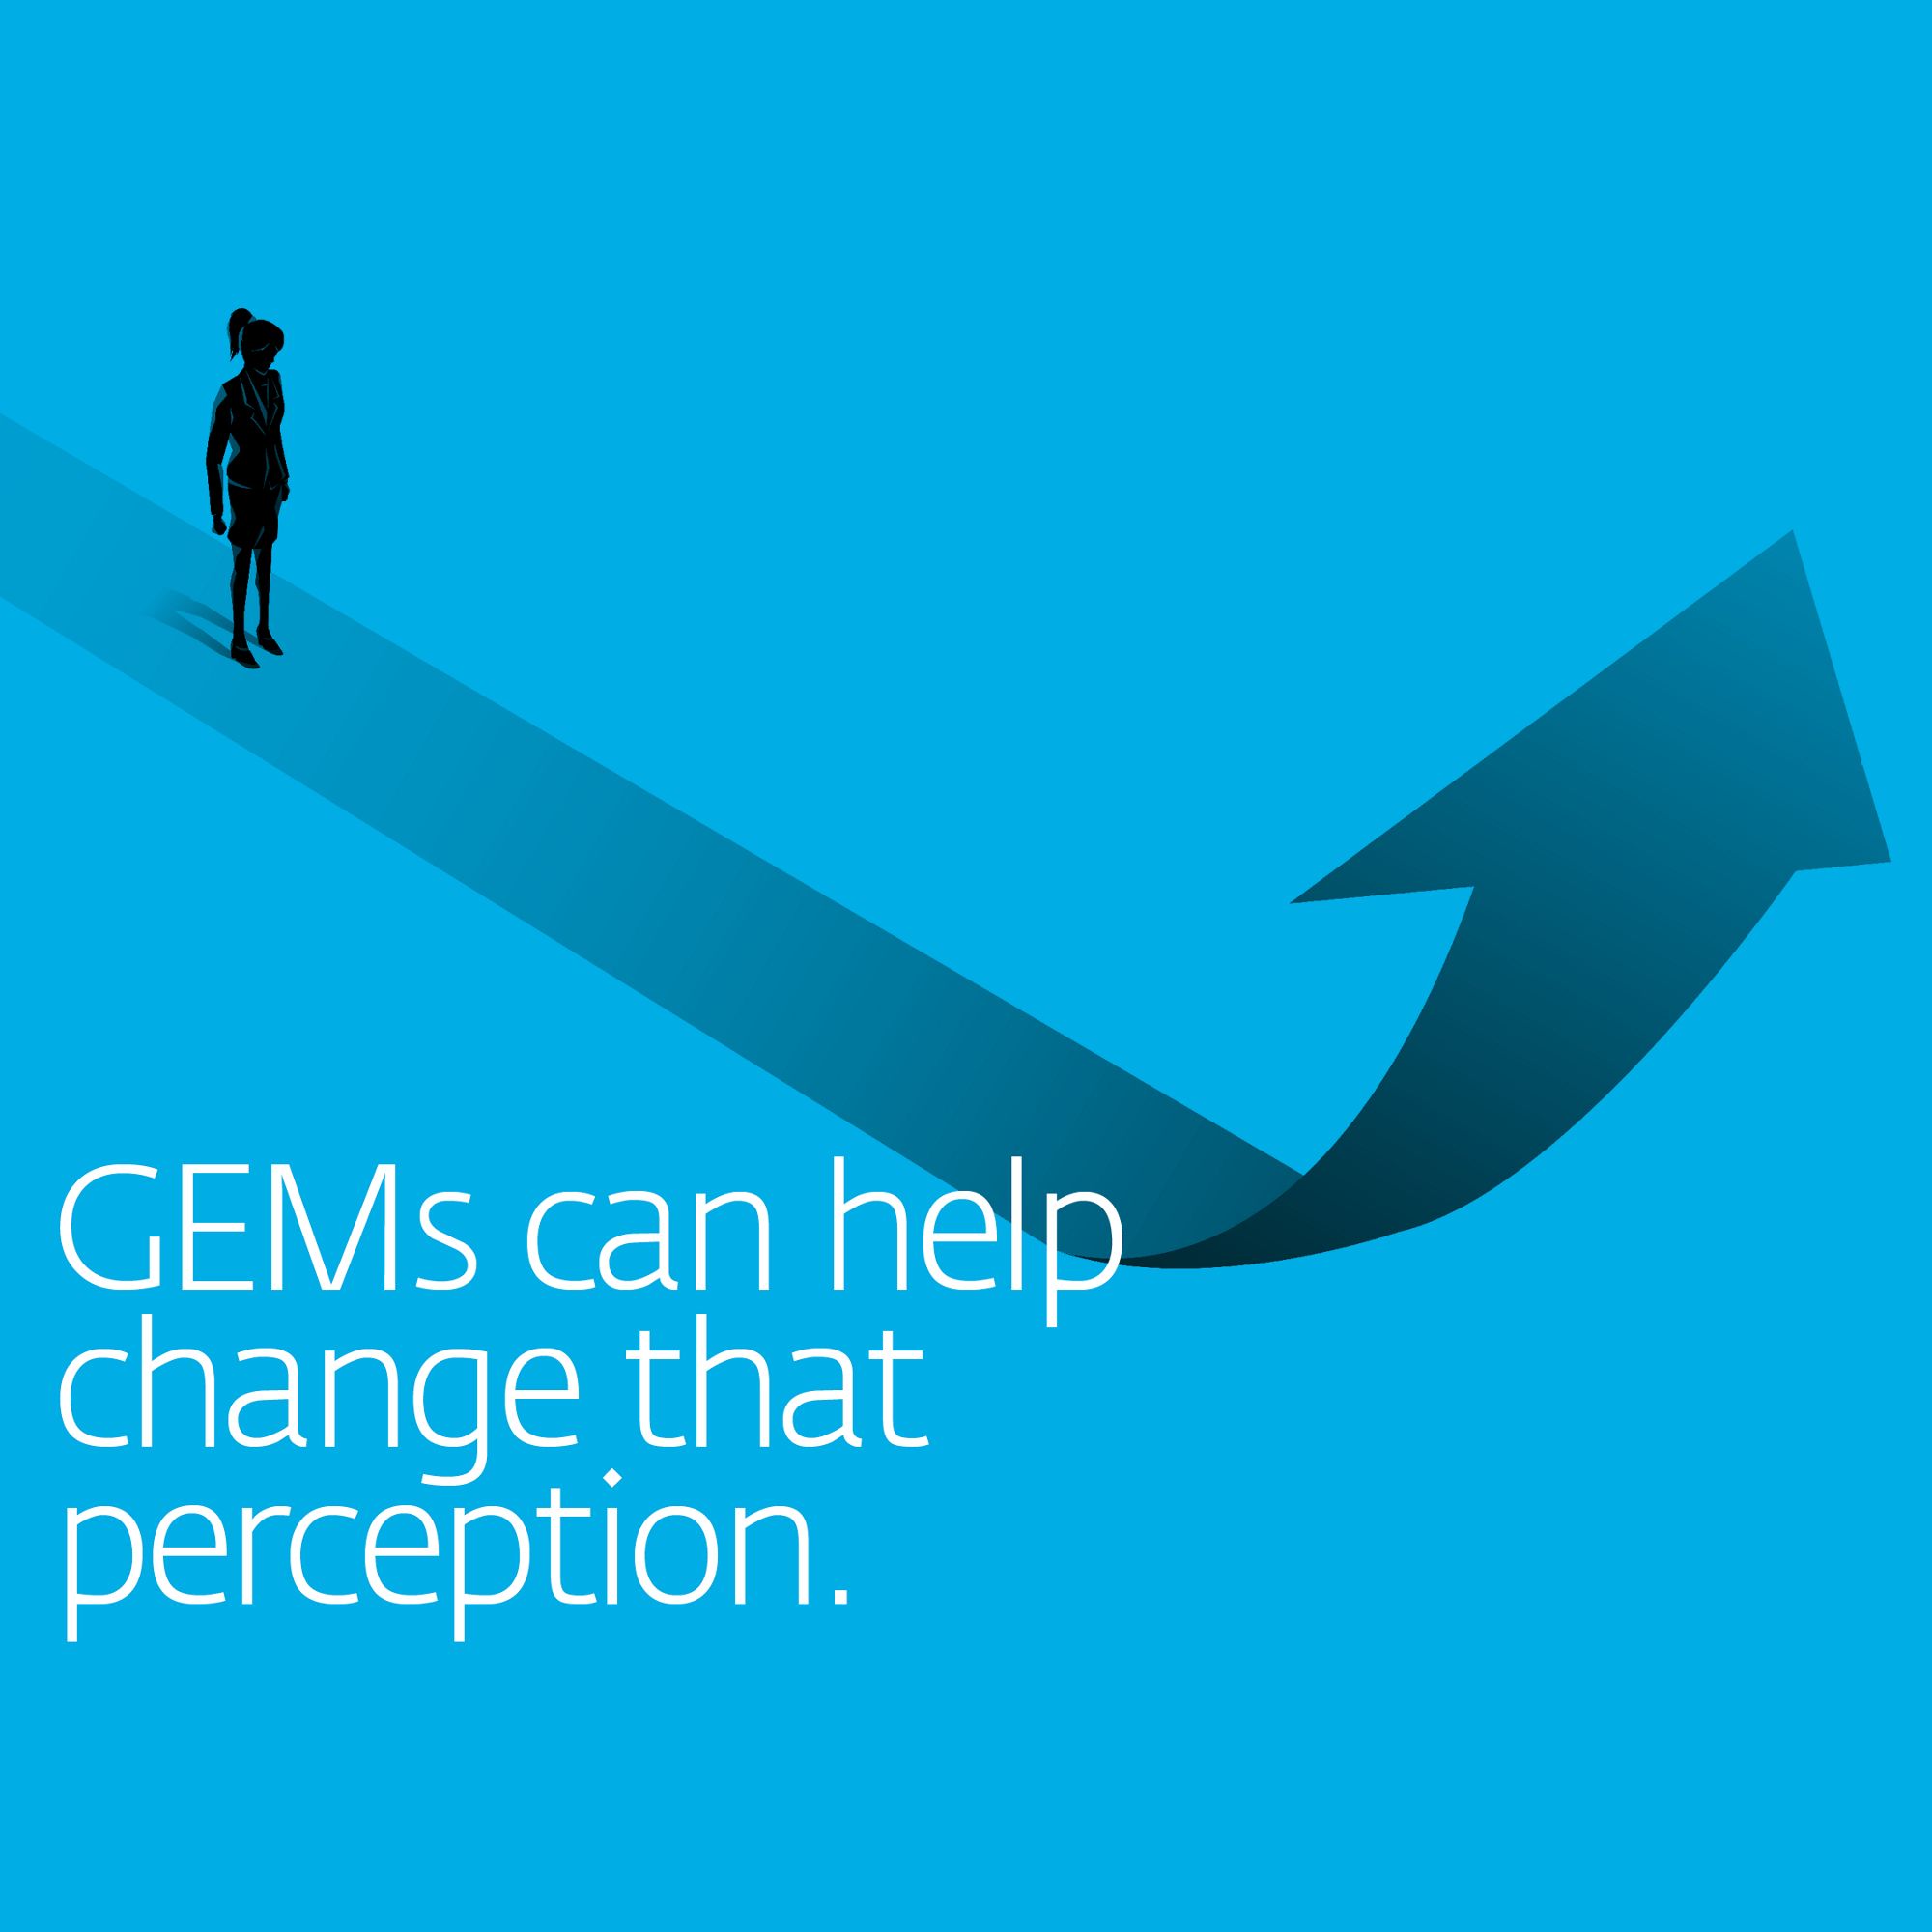 GEMs can help change that perception.